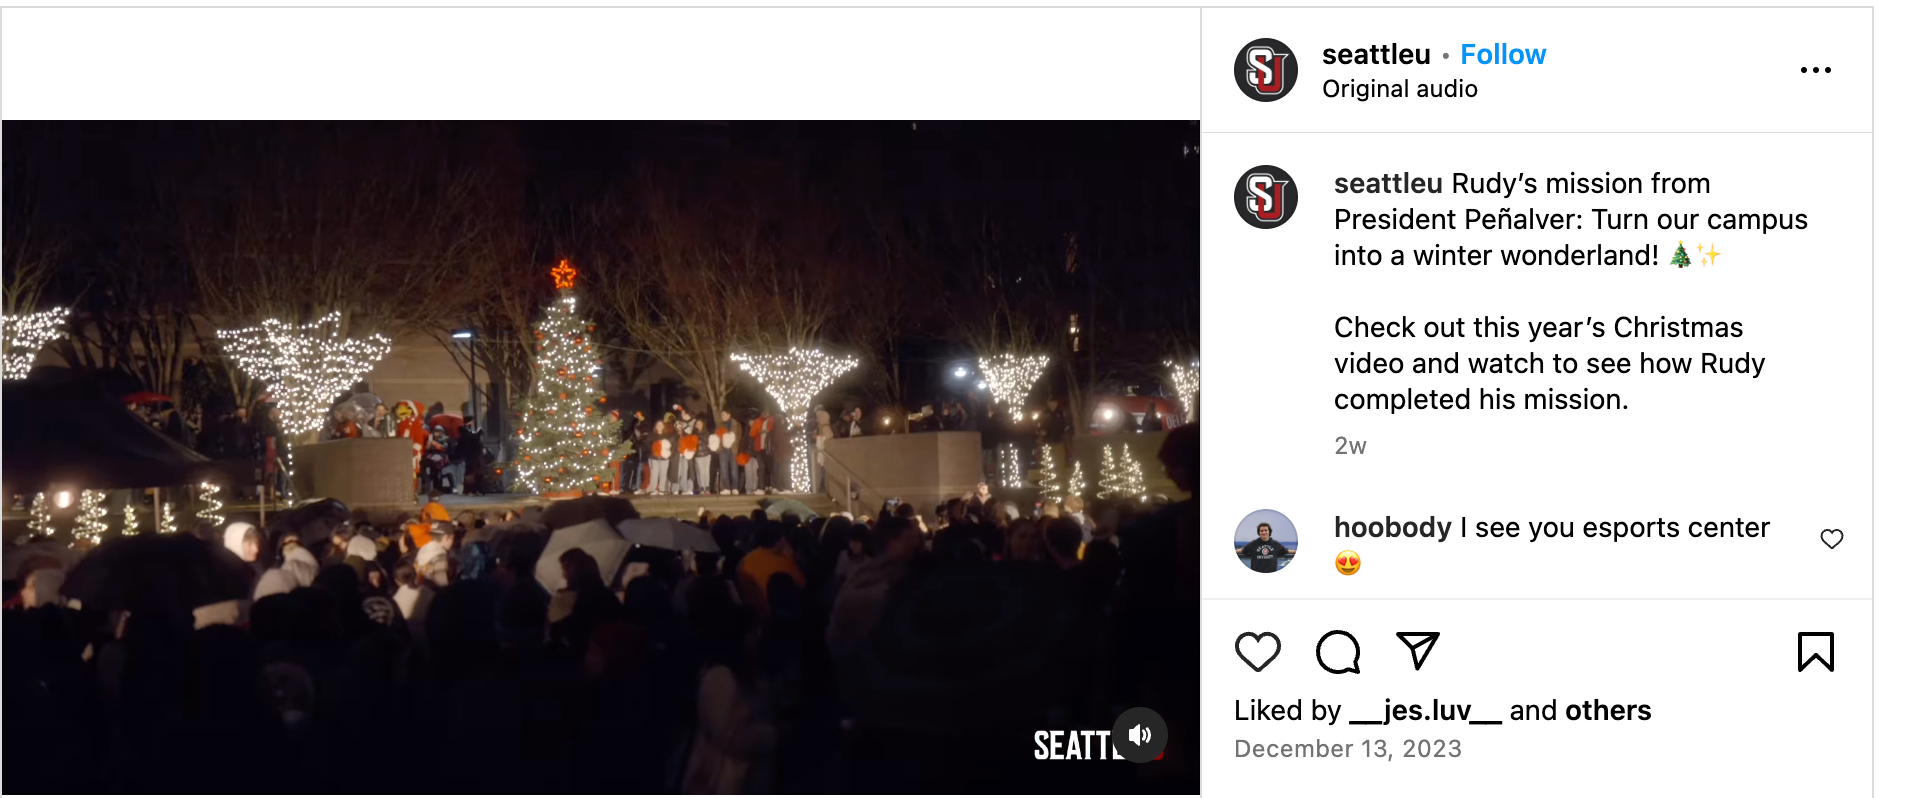 university examples social media posts festive holidays christmas